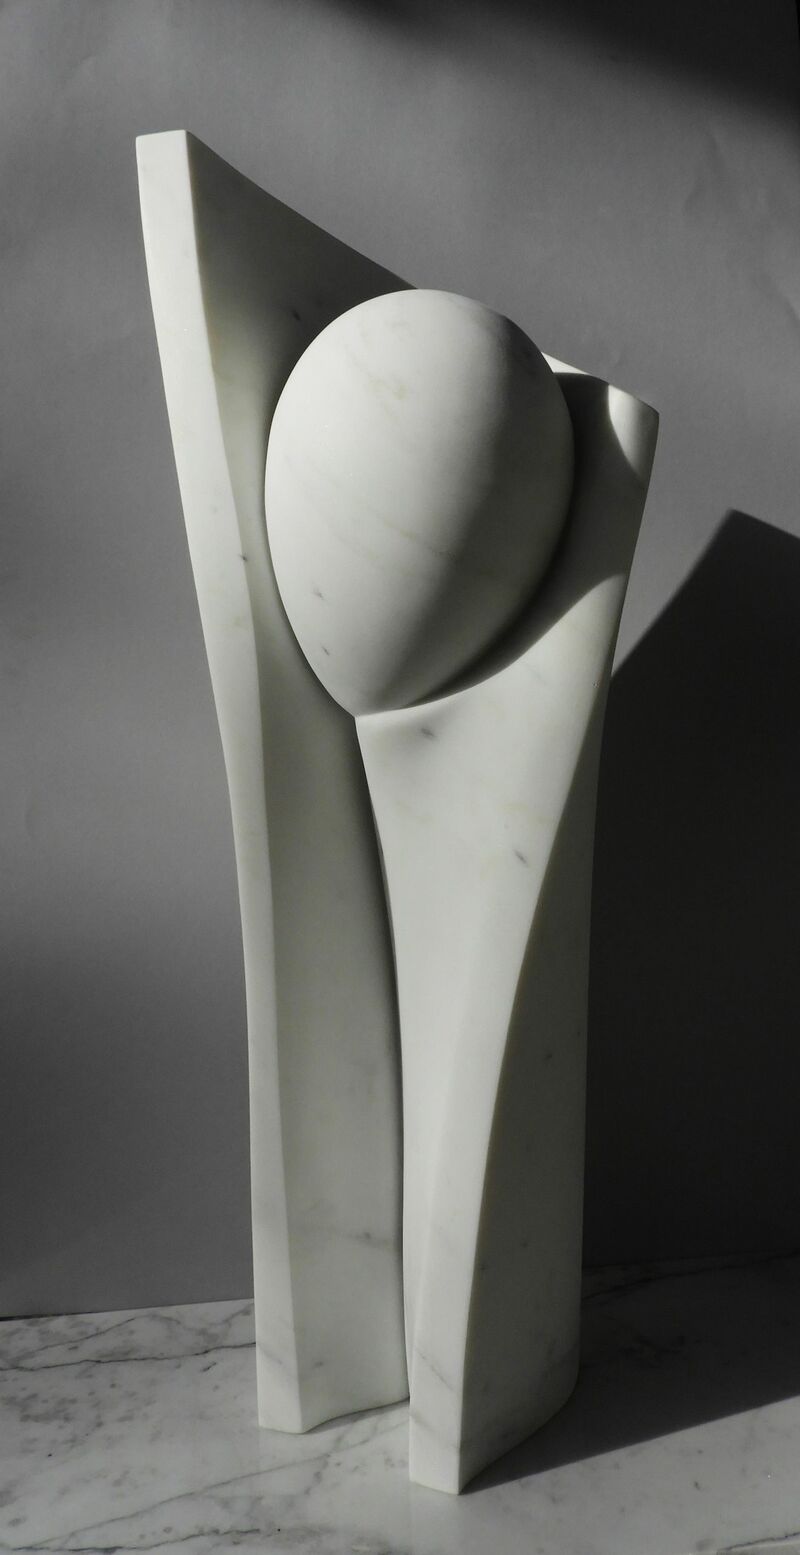 Rinascita - a Sculpture & Installation by Elena Saracino